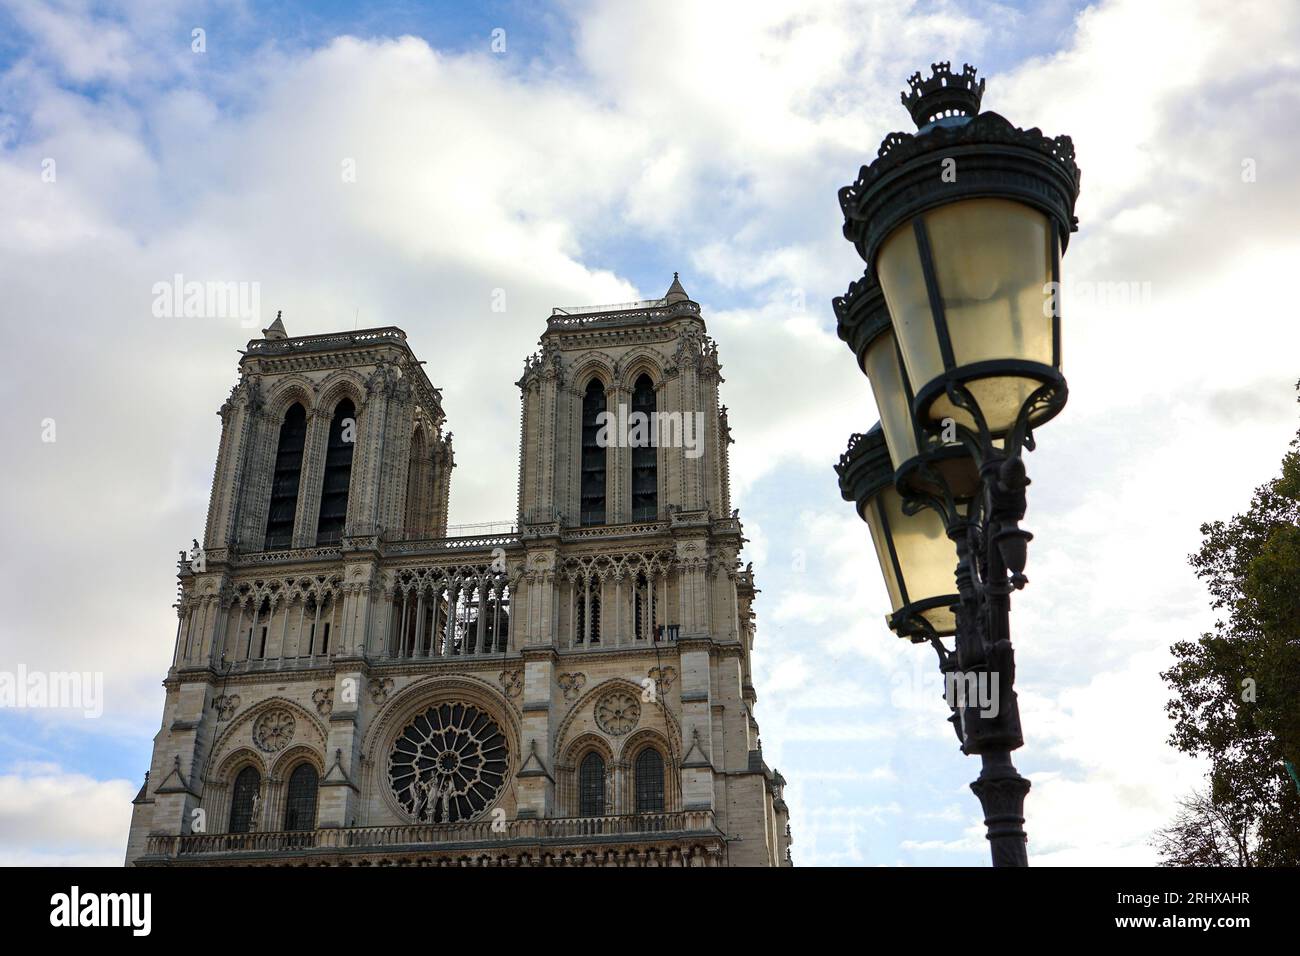 Notre Dame de Paris Cathedral. French Gothic architecture. Stock Photo